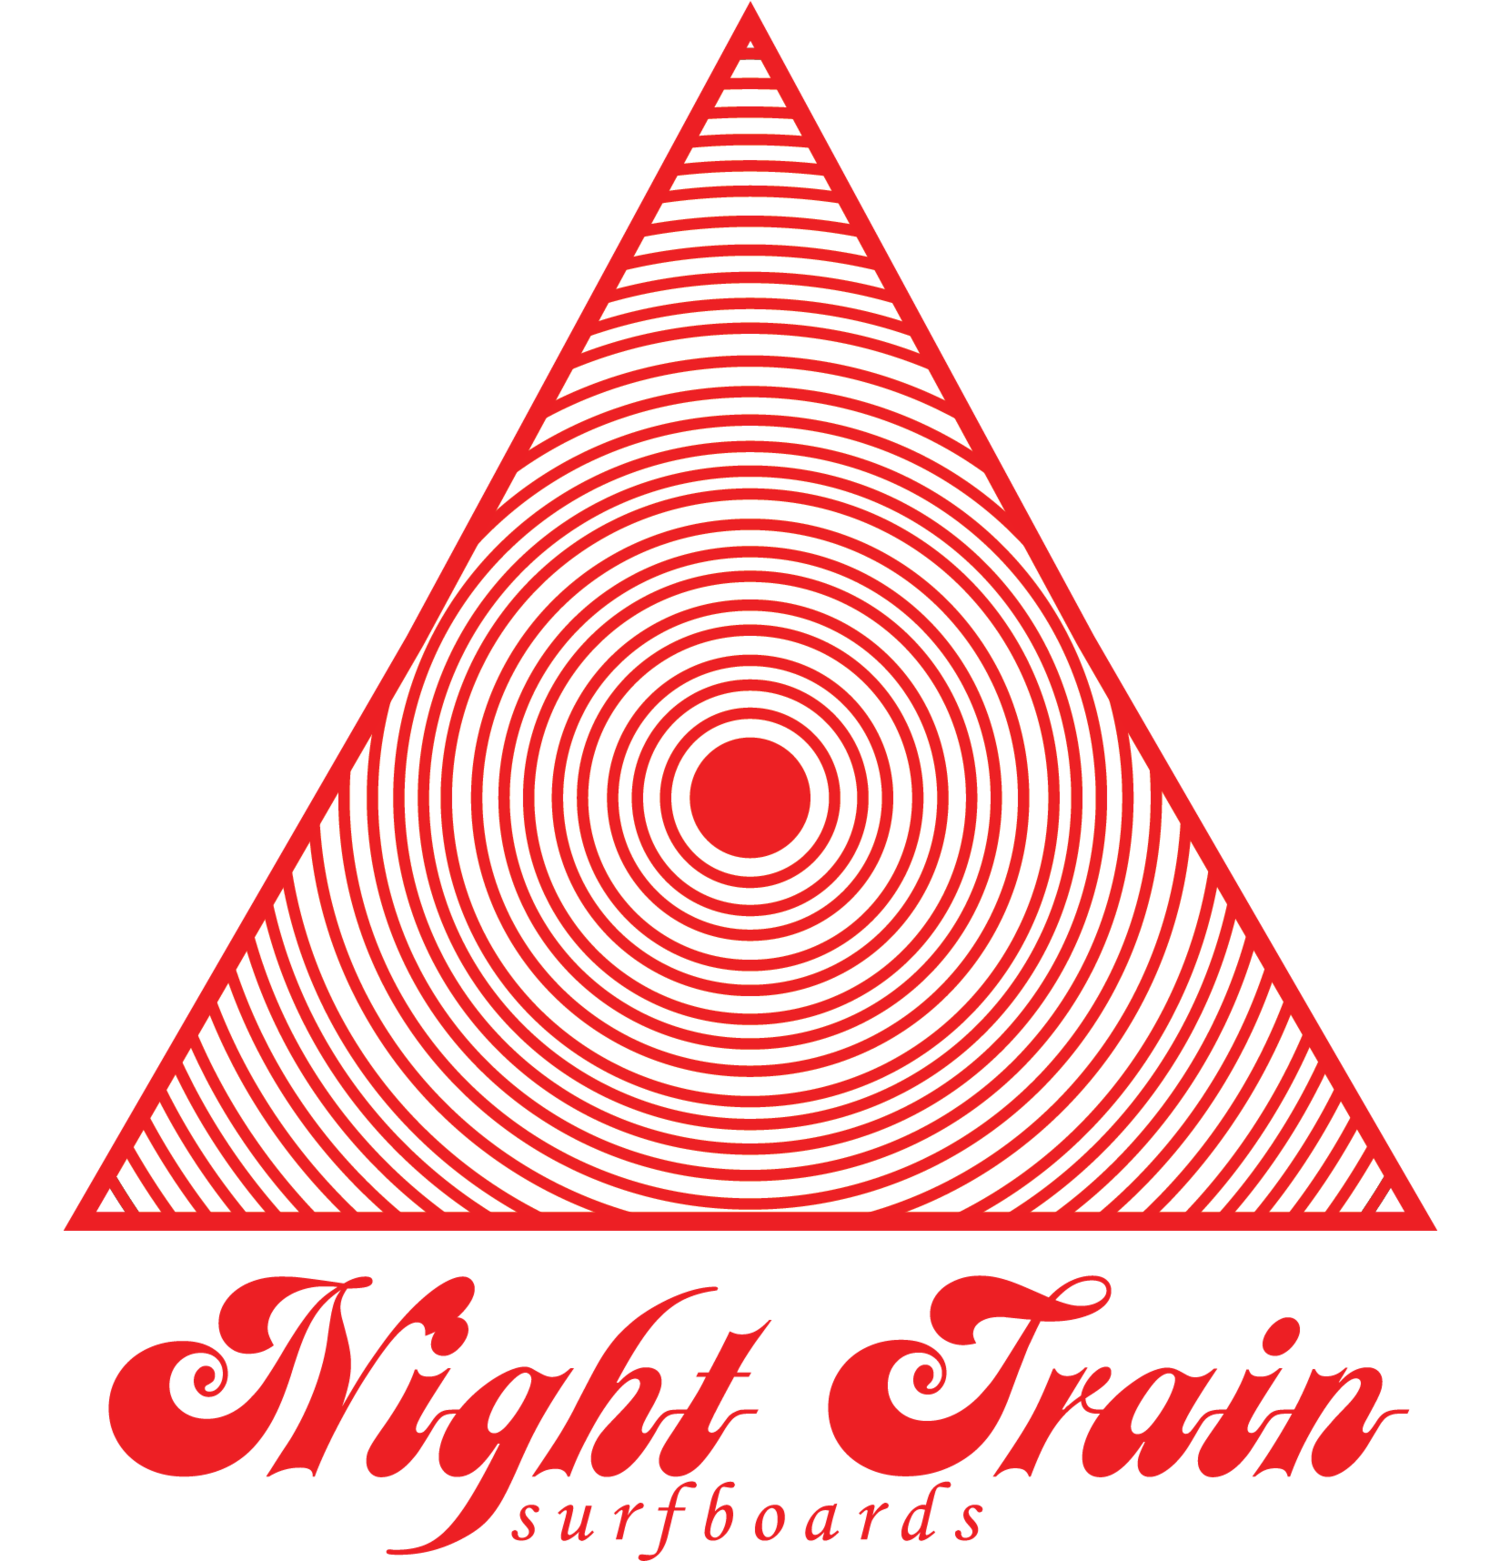    NIGHT TRAIN